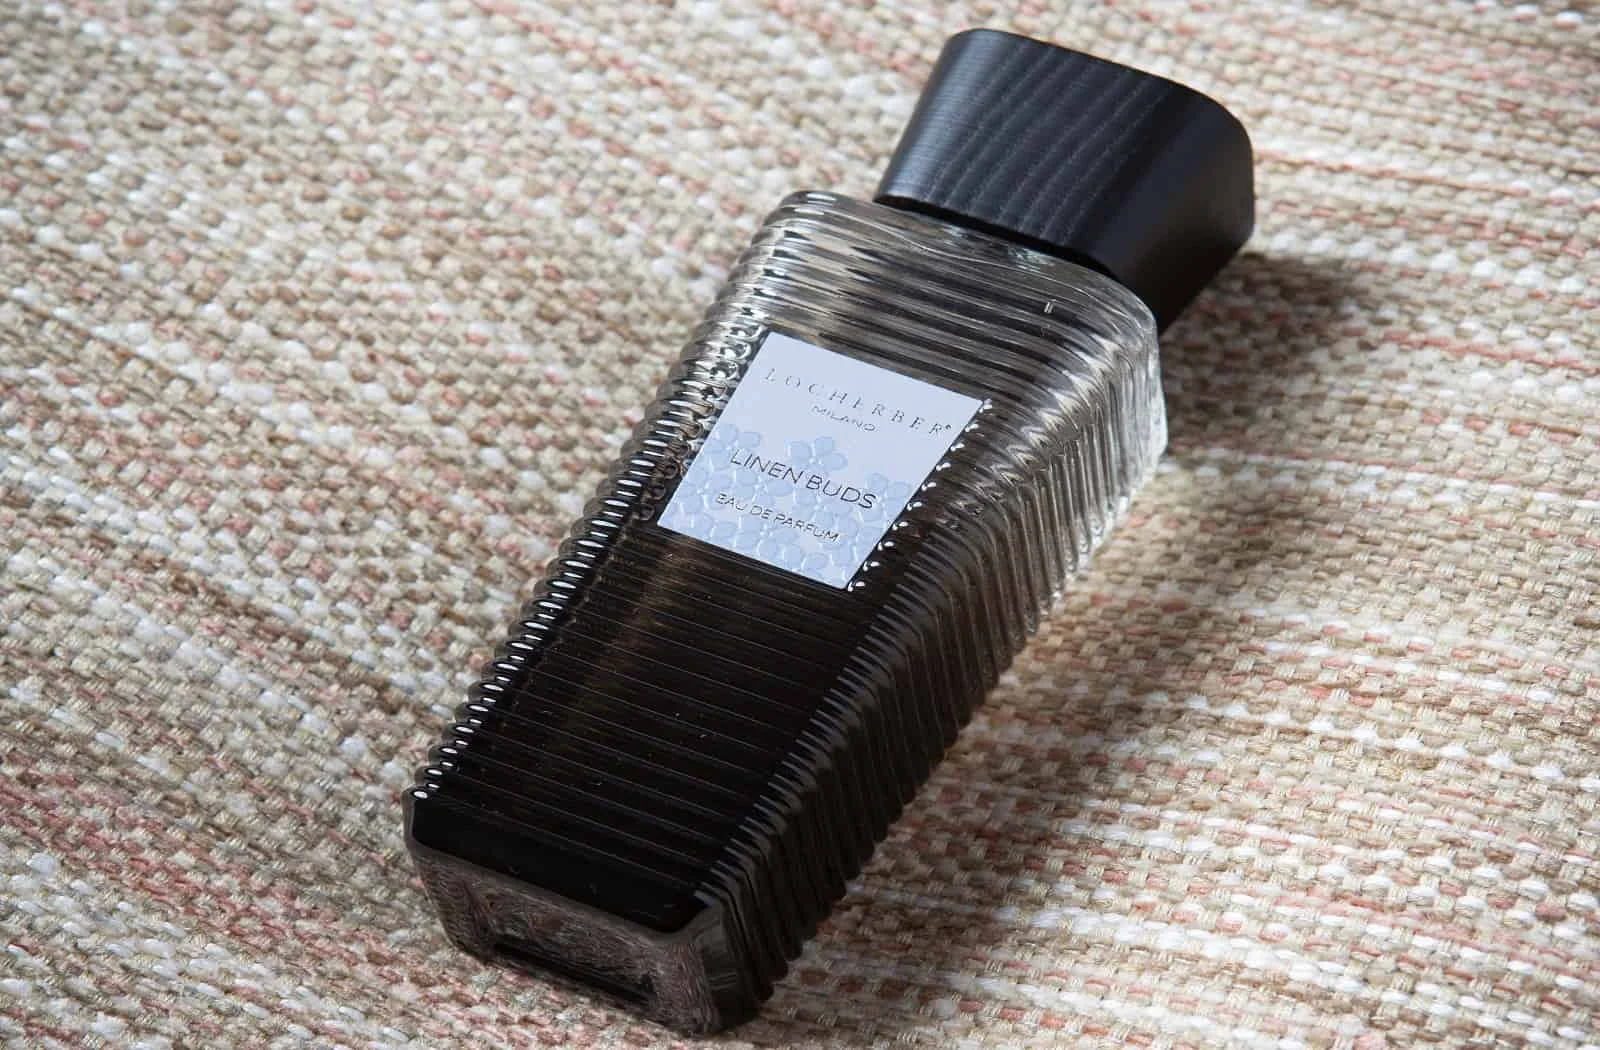 Locherber Milano Linen Buds | Mood Collection | Eau de Parfum Spray 100 ml